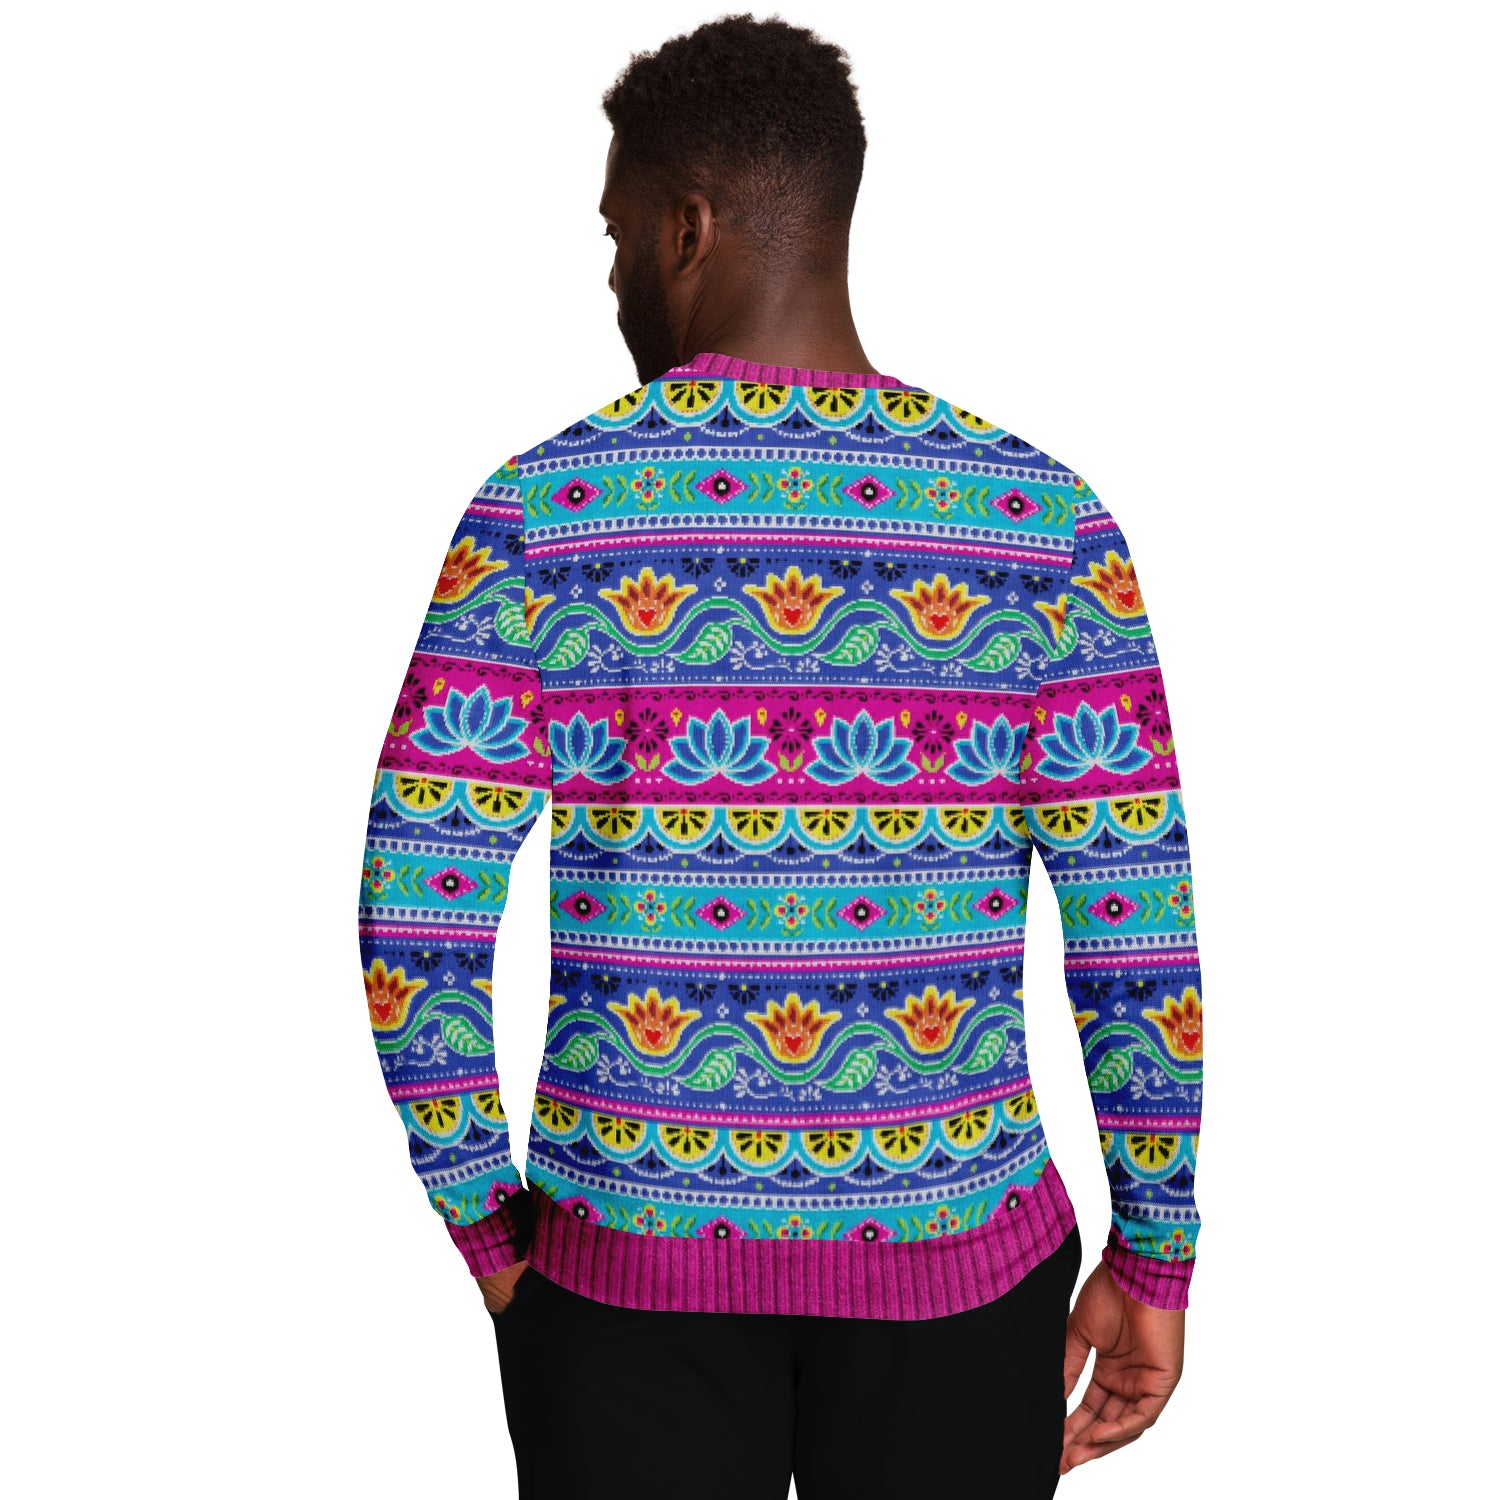 Om for Christmas - Ugly Christmas Sweater